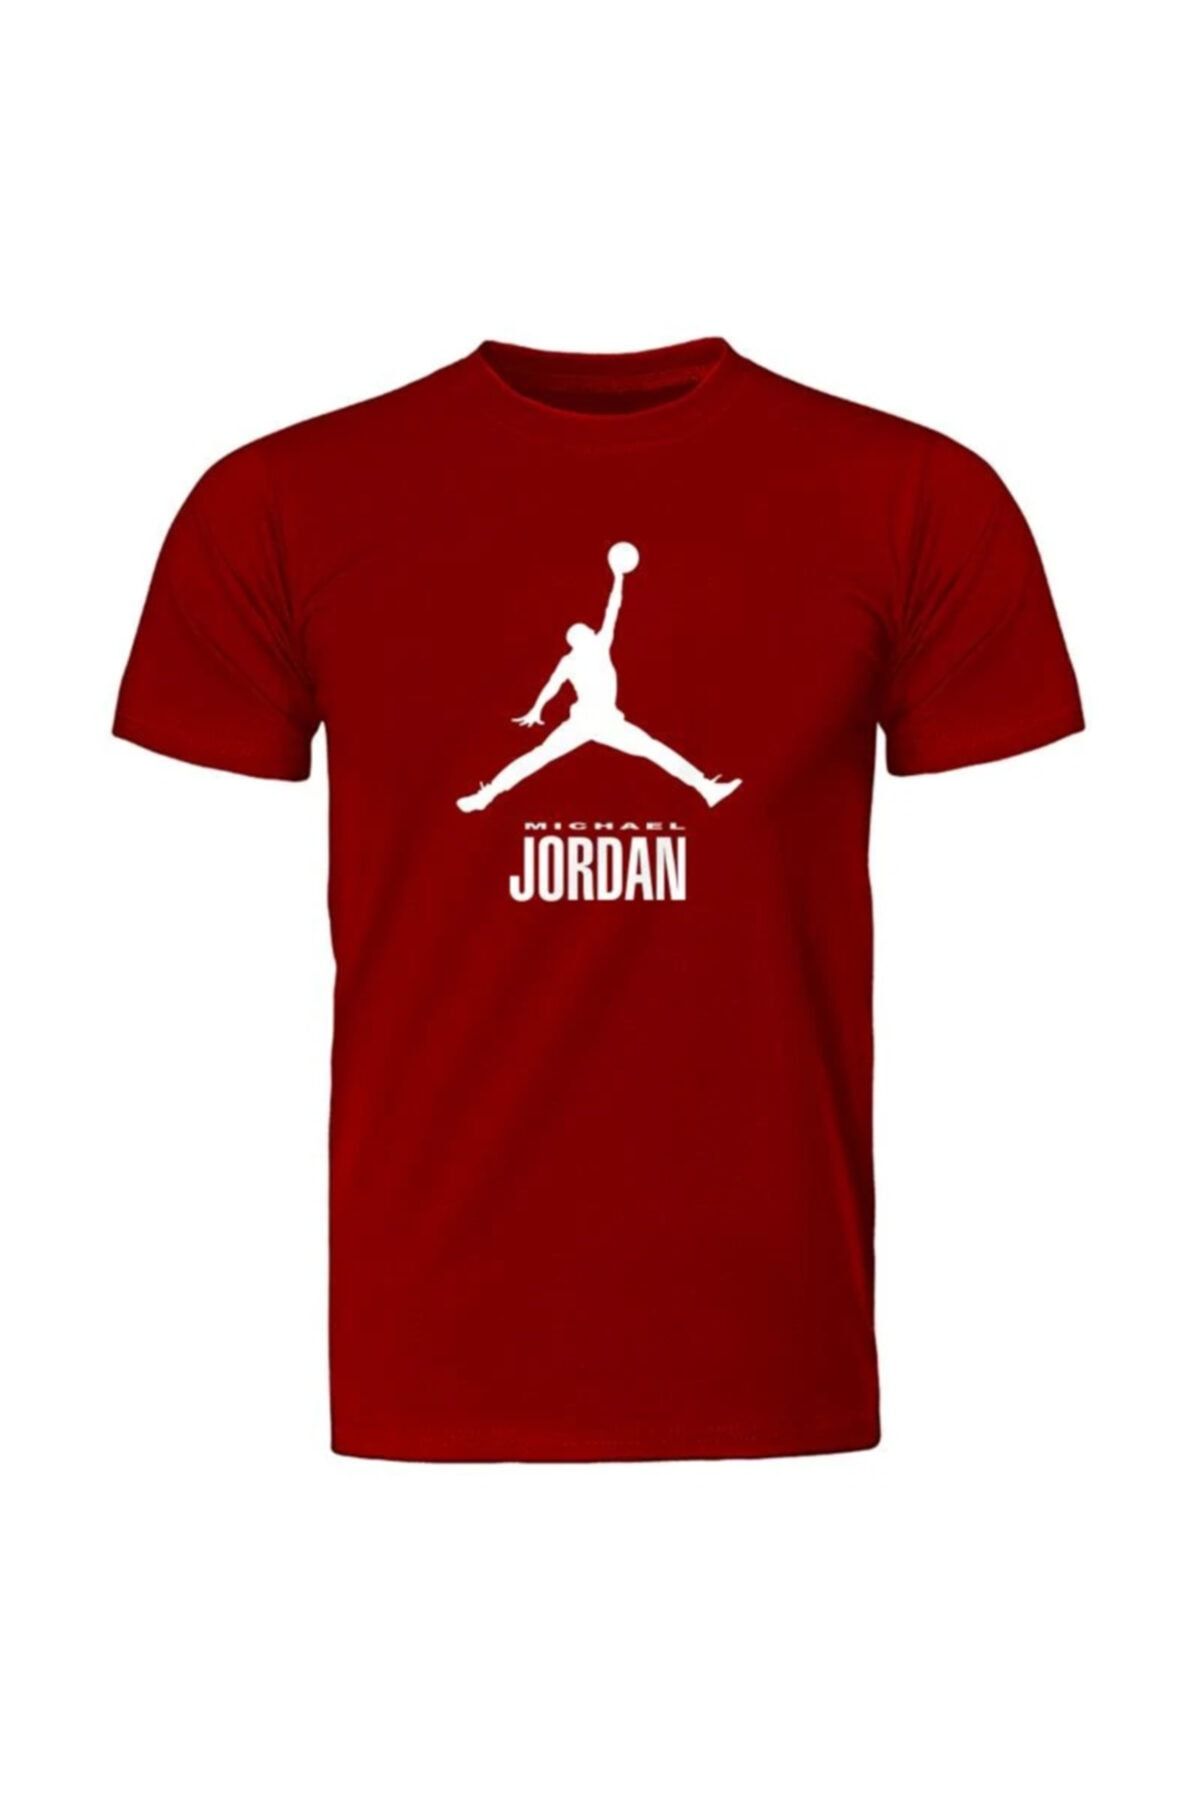 Fandomya Casual NBA Jordan Kırmızı Tişört - ST153CSL1229